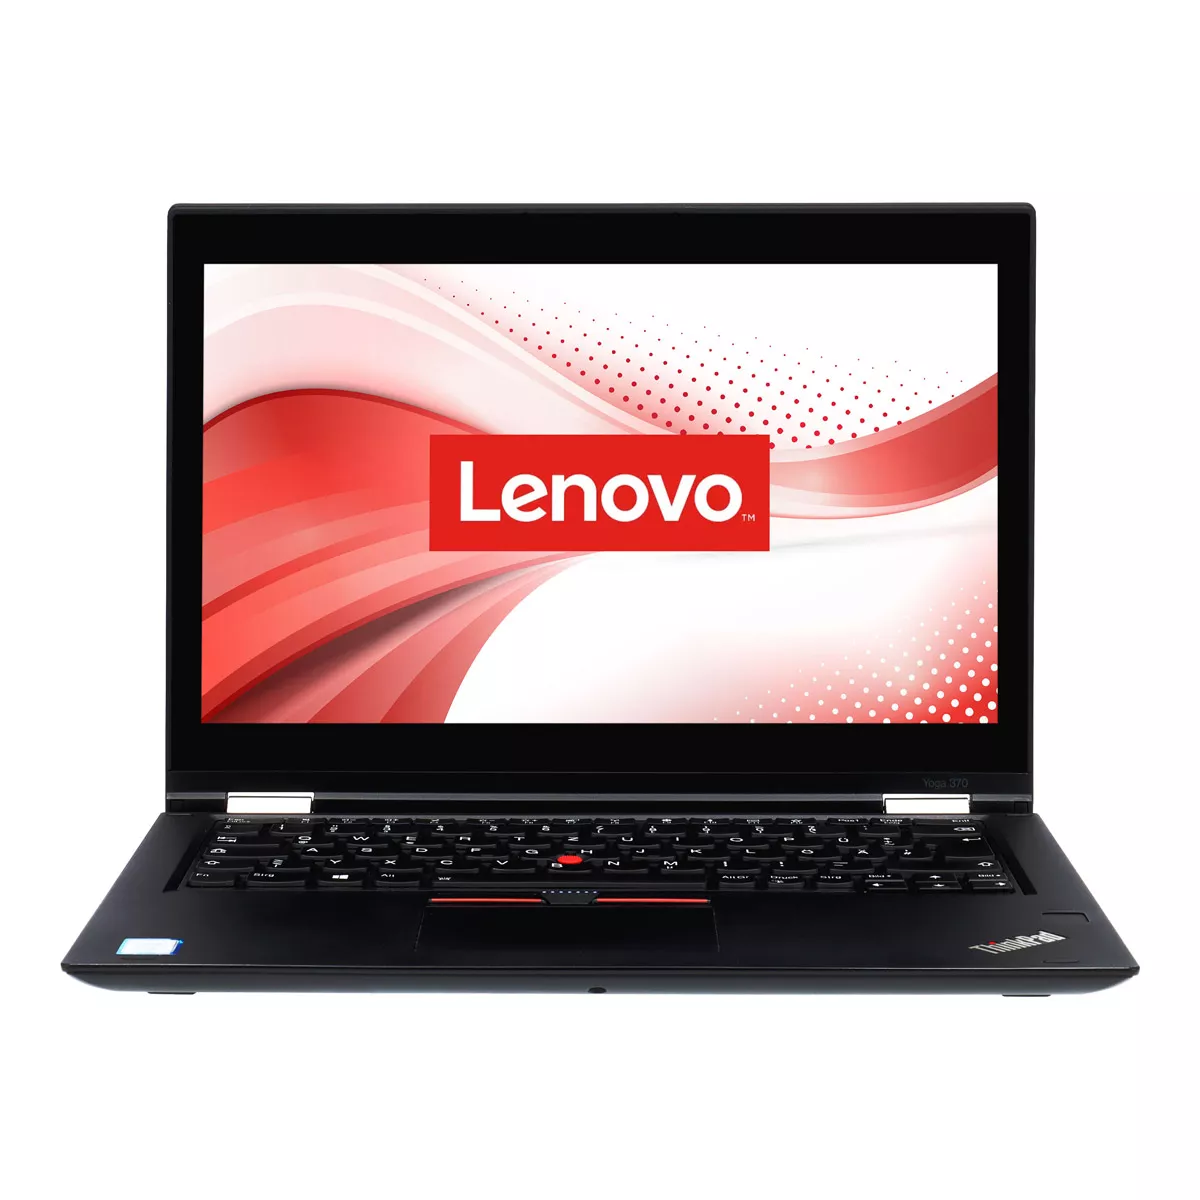 Lenovo ThinkPad Yoga 370 Core i5 7300U Full-HD Touch 8 GB 240 GB M.2 SSD Webcam A